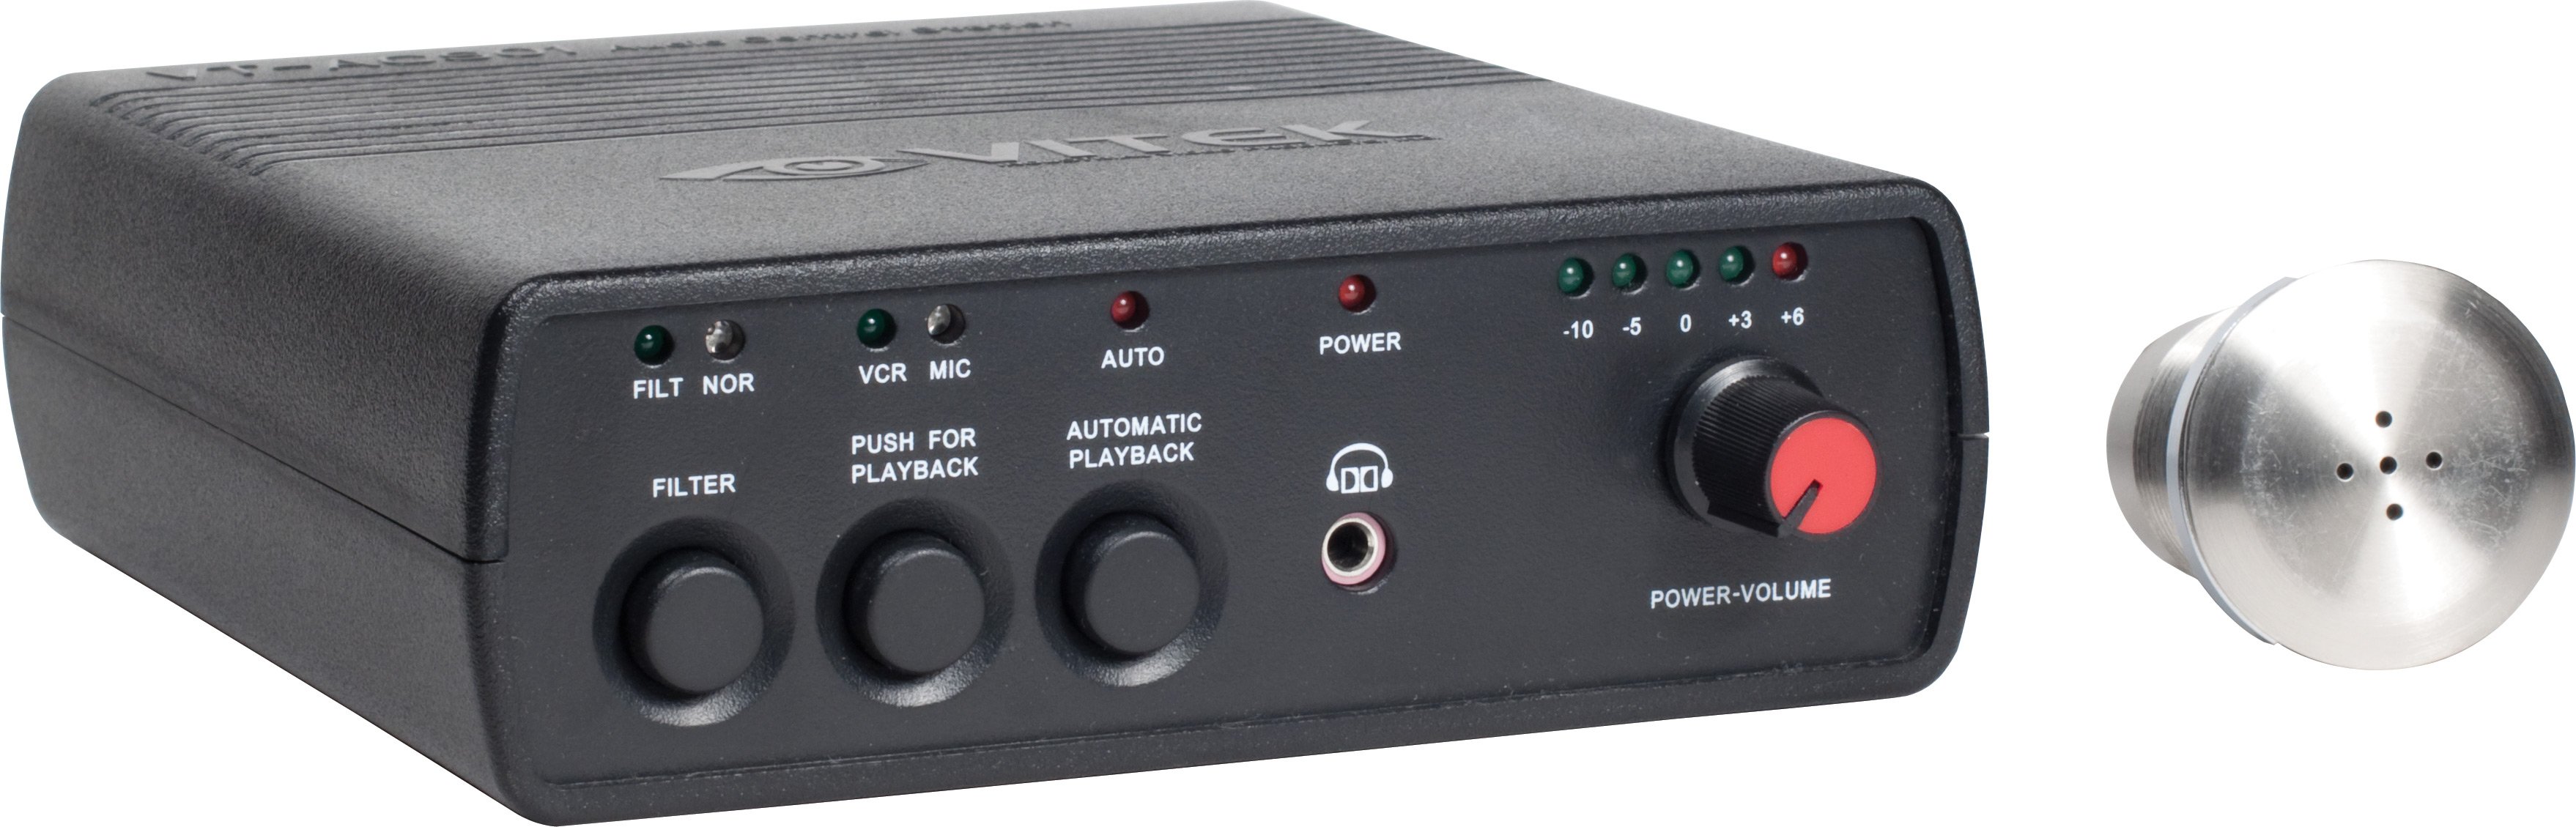 Audio Surveillance Kit with Discreet Microphone